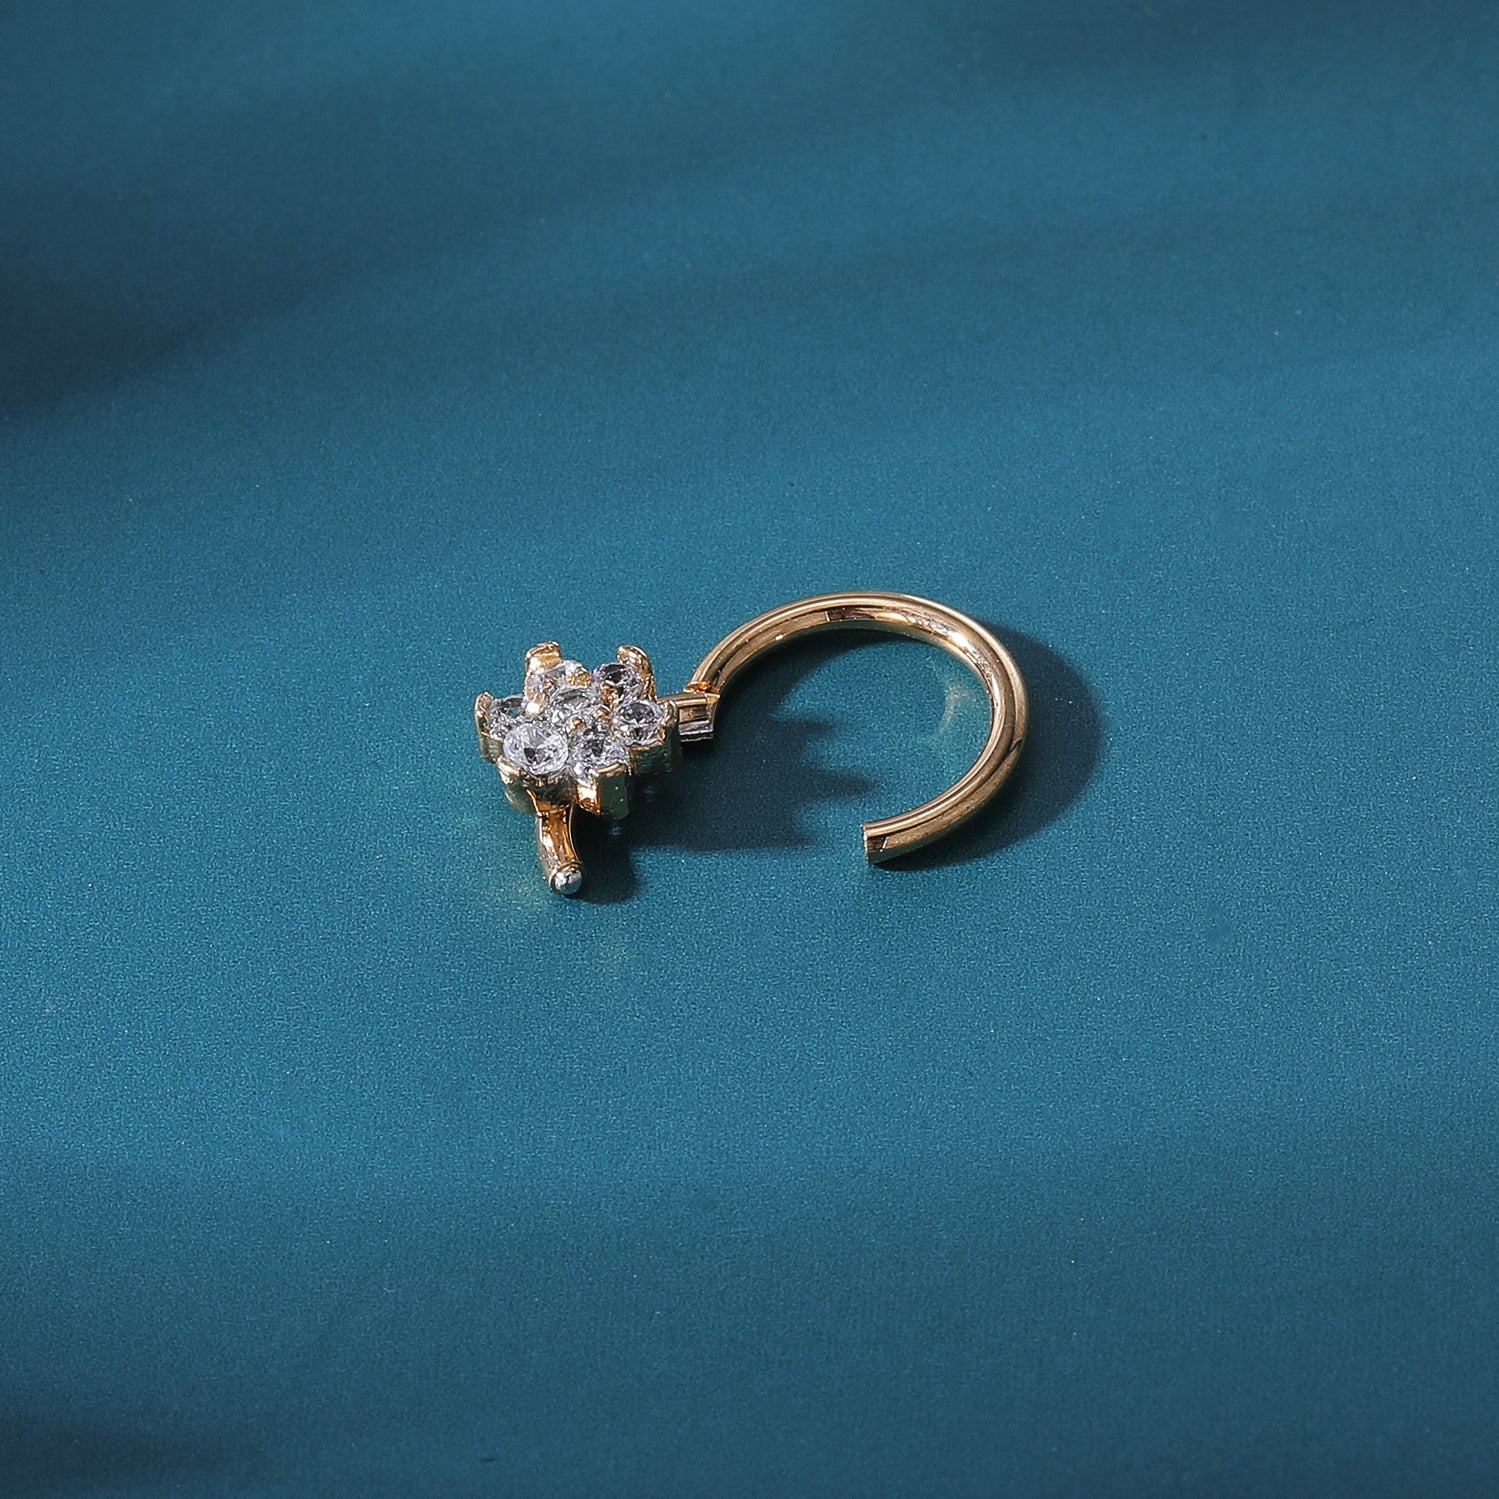 16g-flower-crystal-nose-ring-gold-sliver-septum-clicker-stainless-steel-helix-cartilage-piercing